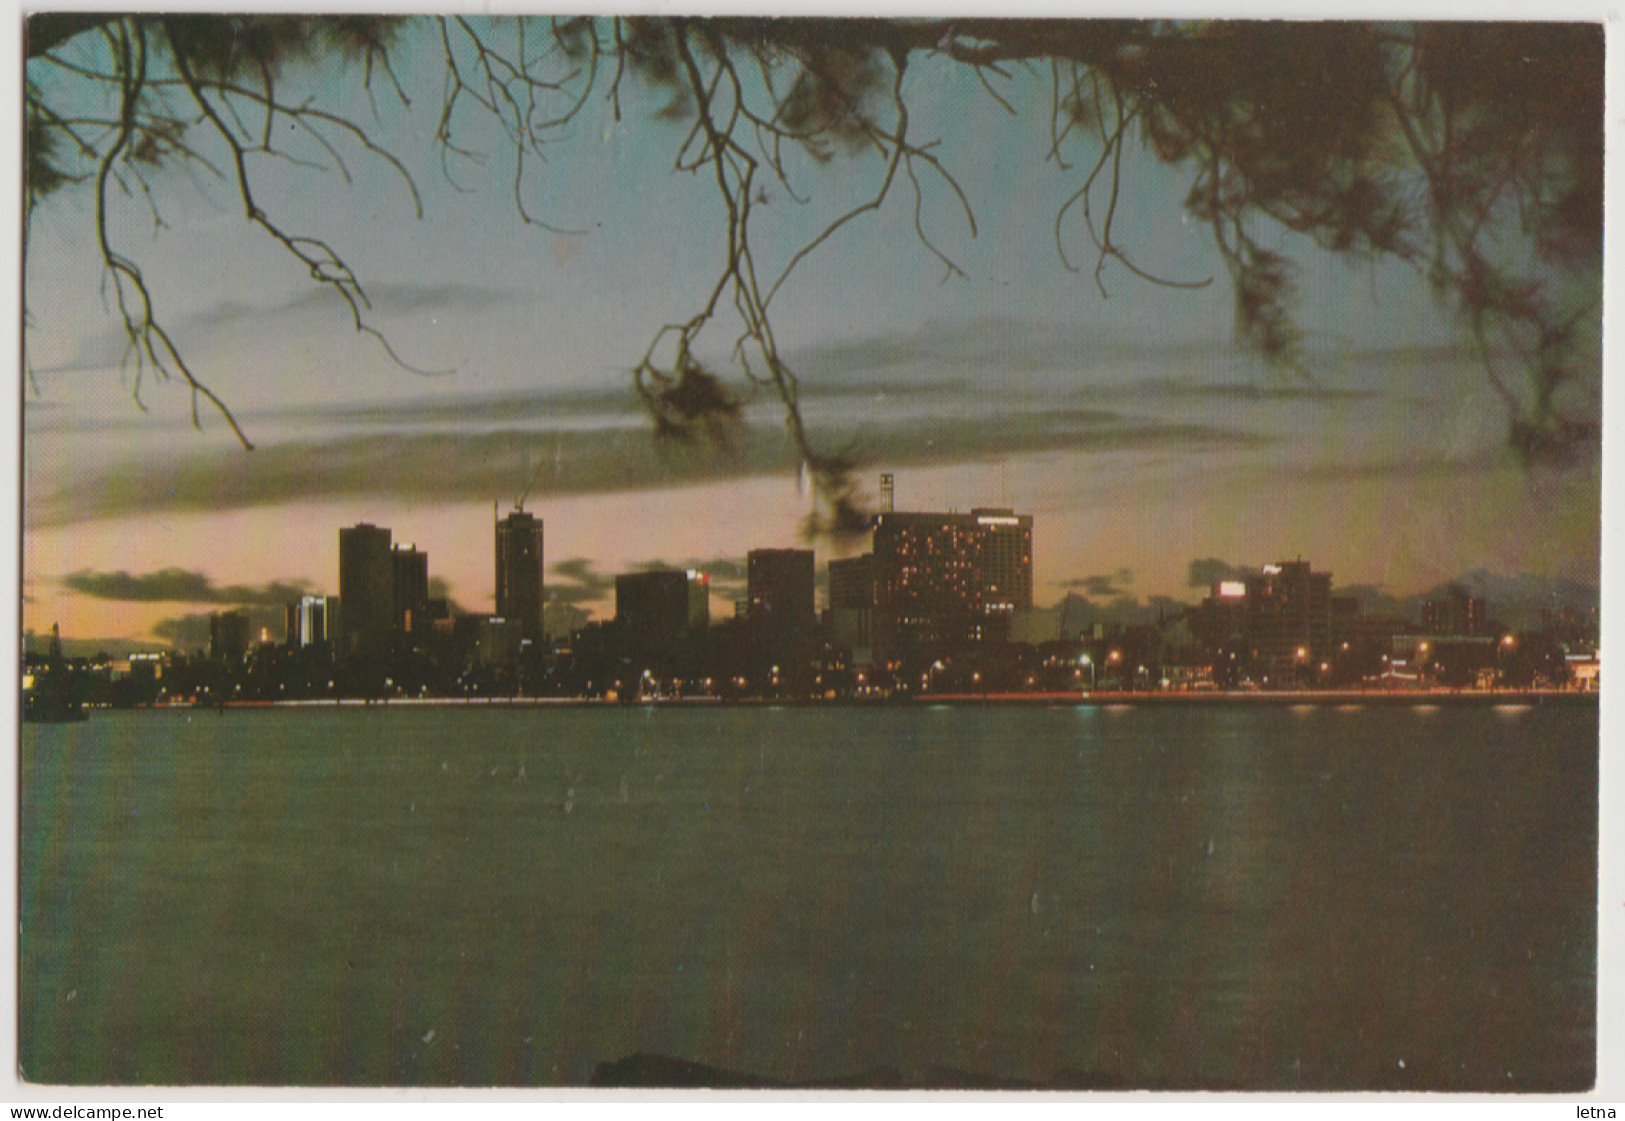 WESTERN AUSTRALIA WA City Skyline & River At Dusk PERTH Murfett P7066-2 Postcard C1970s - Perth